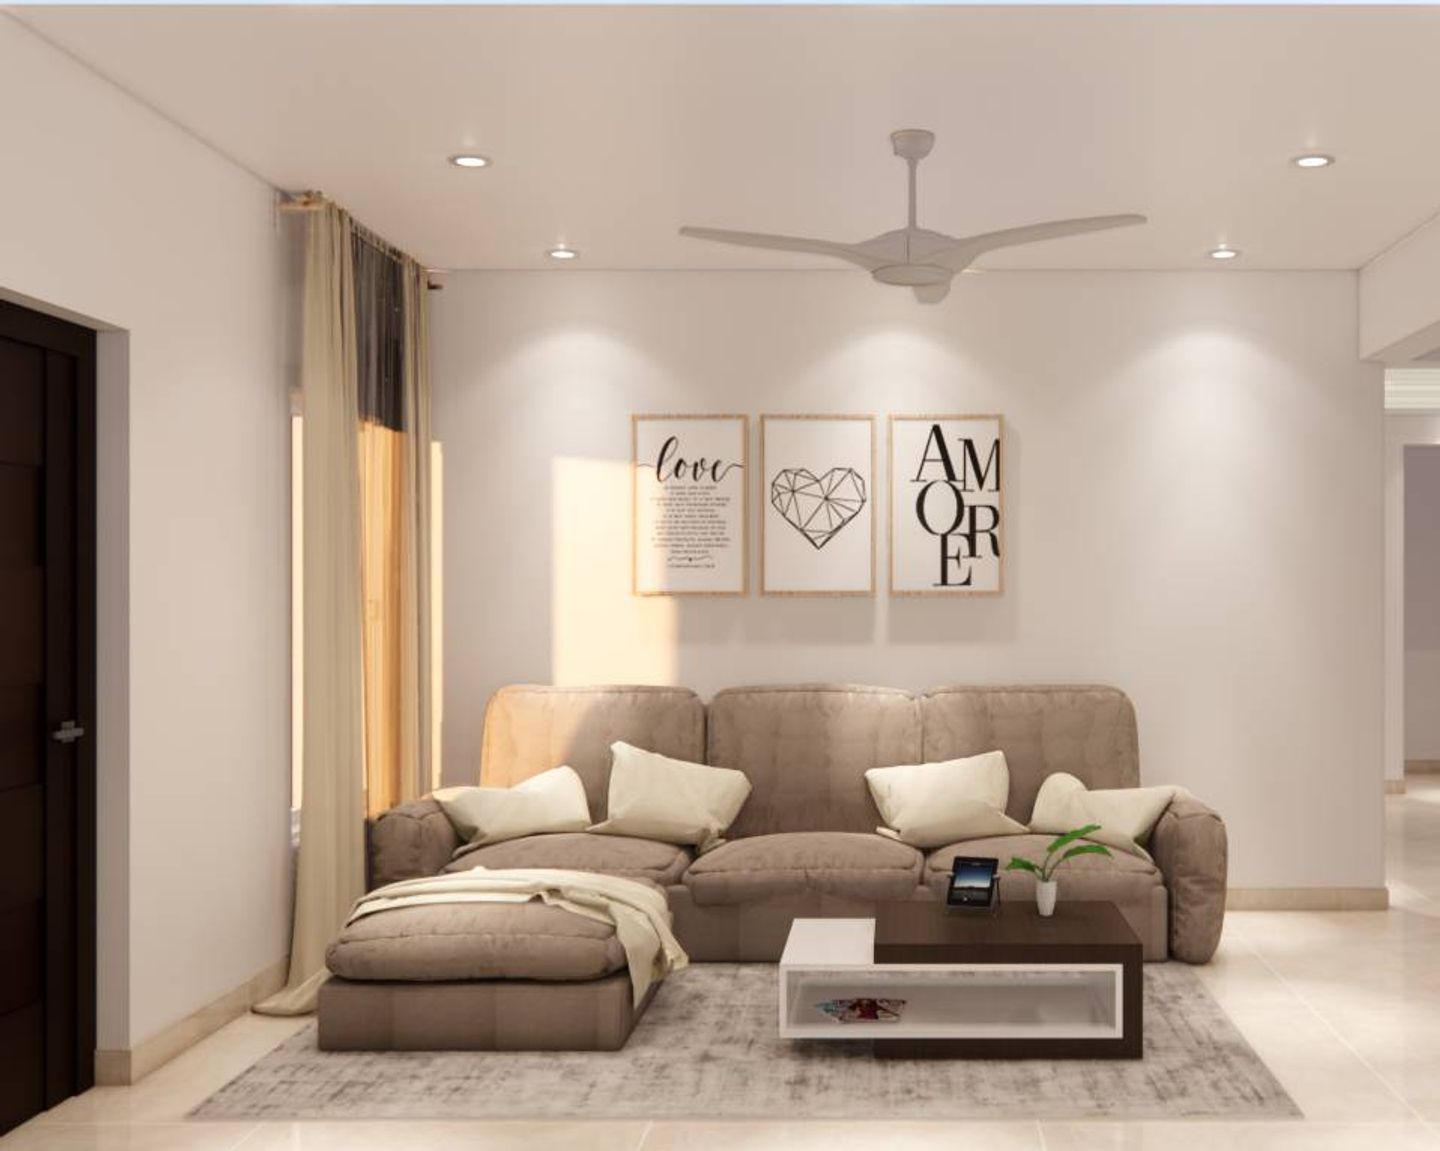 Living Room Design With Framed Wall Art - Livspace